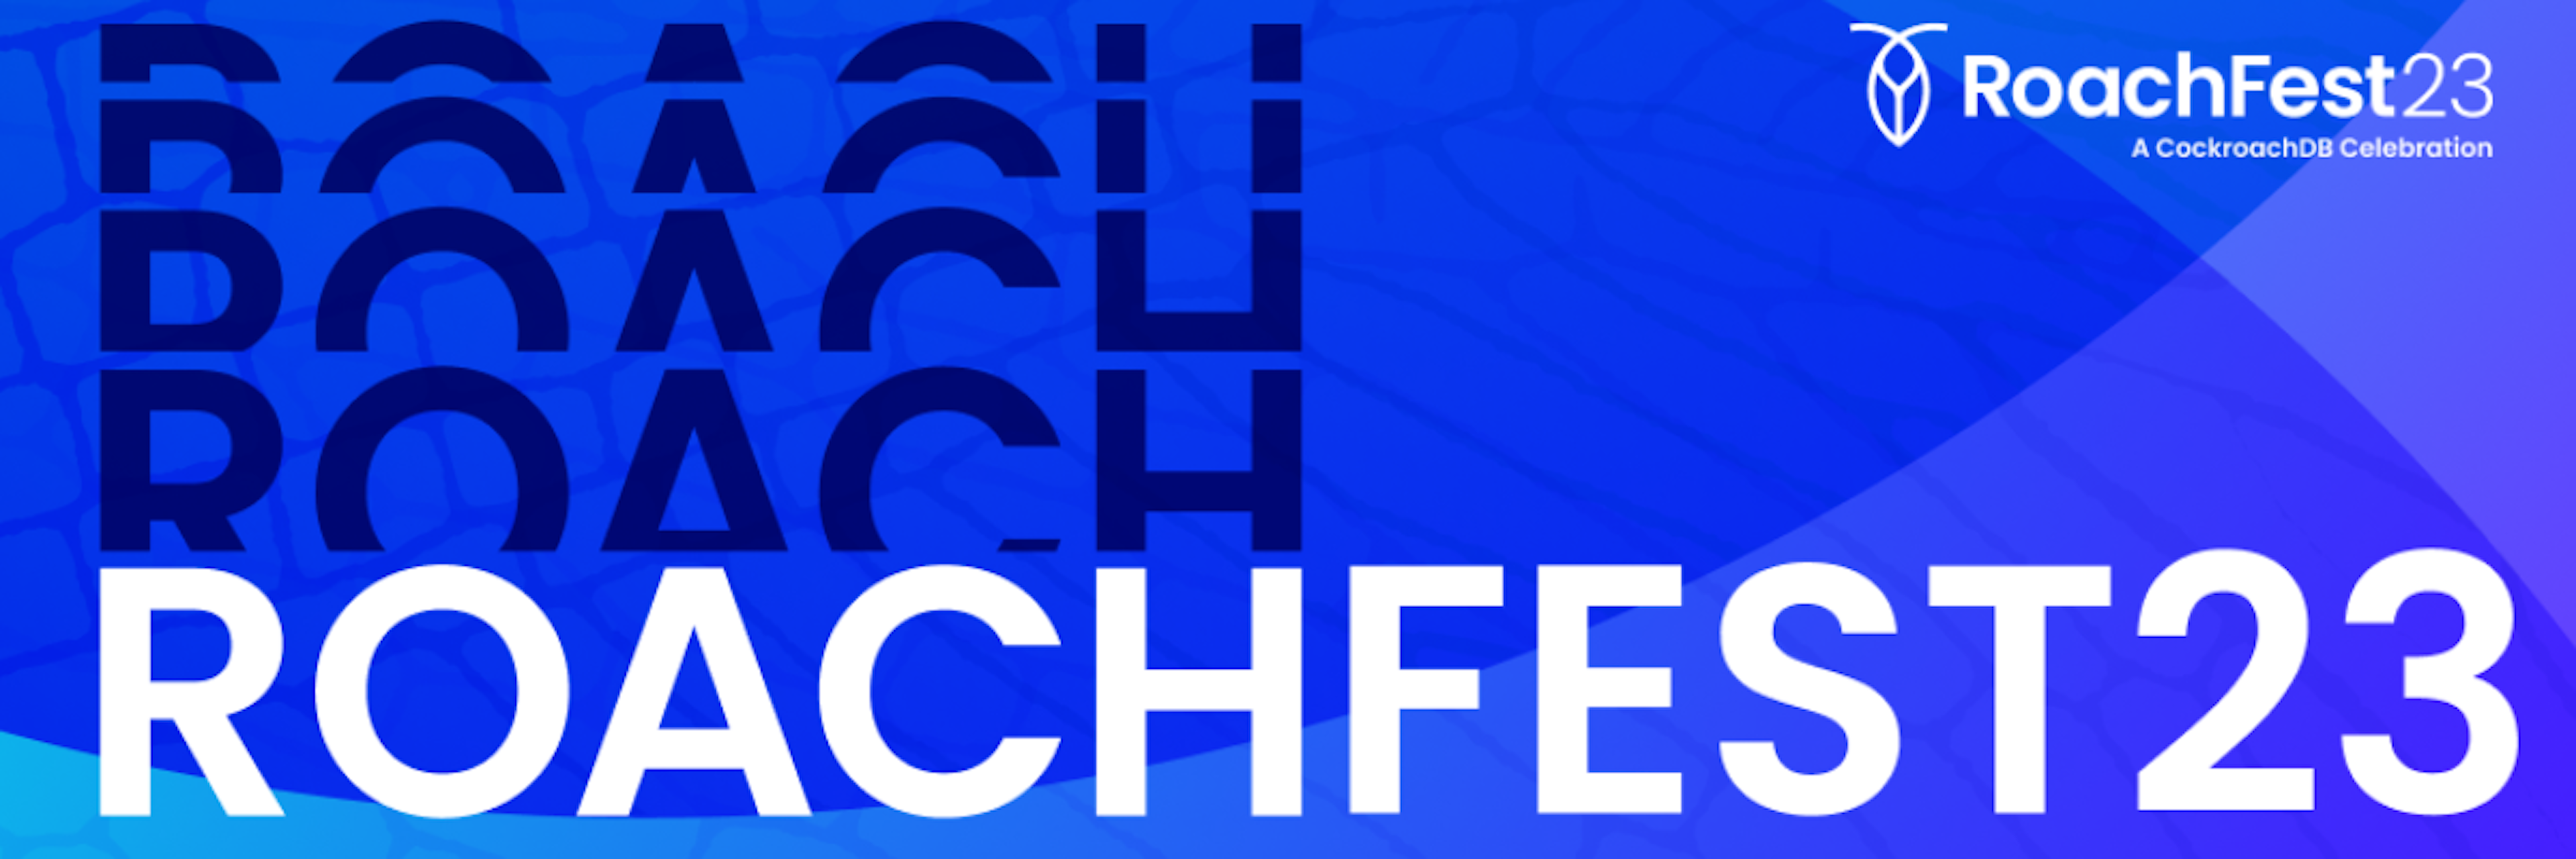 roachfest-blog-image